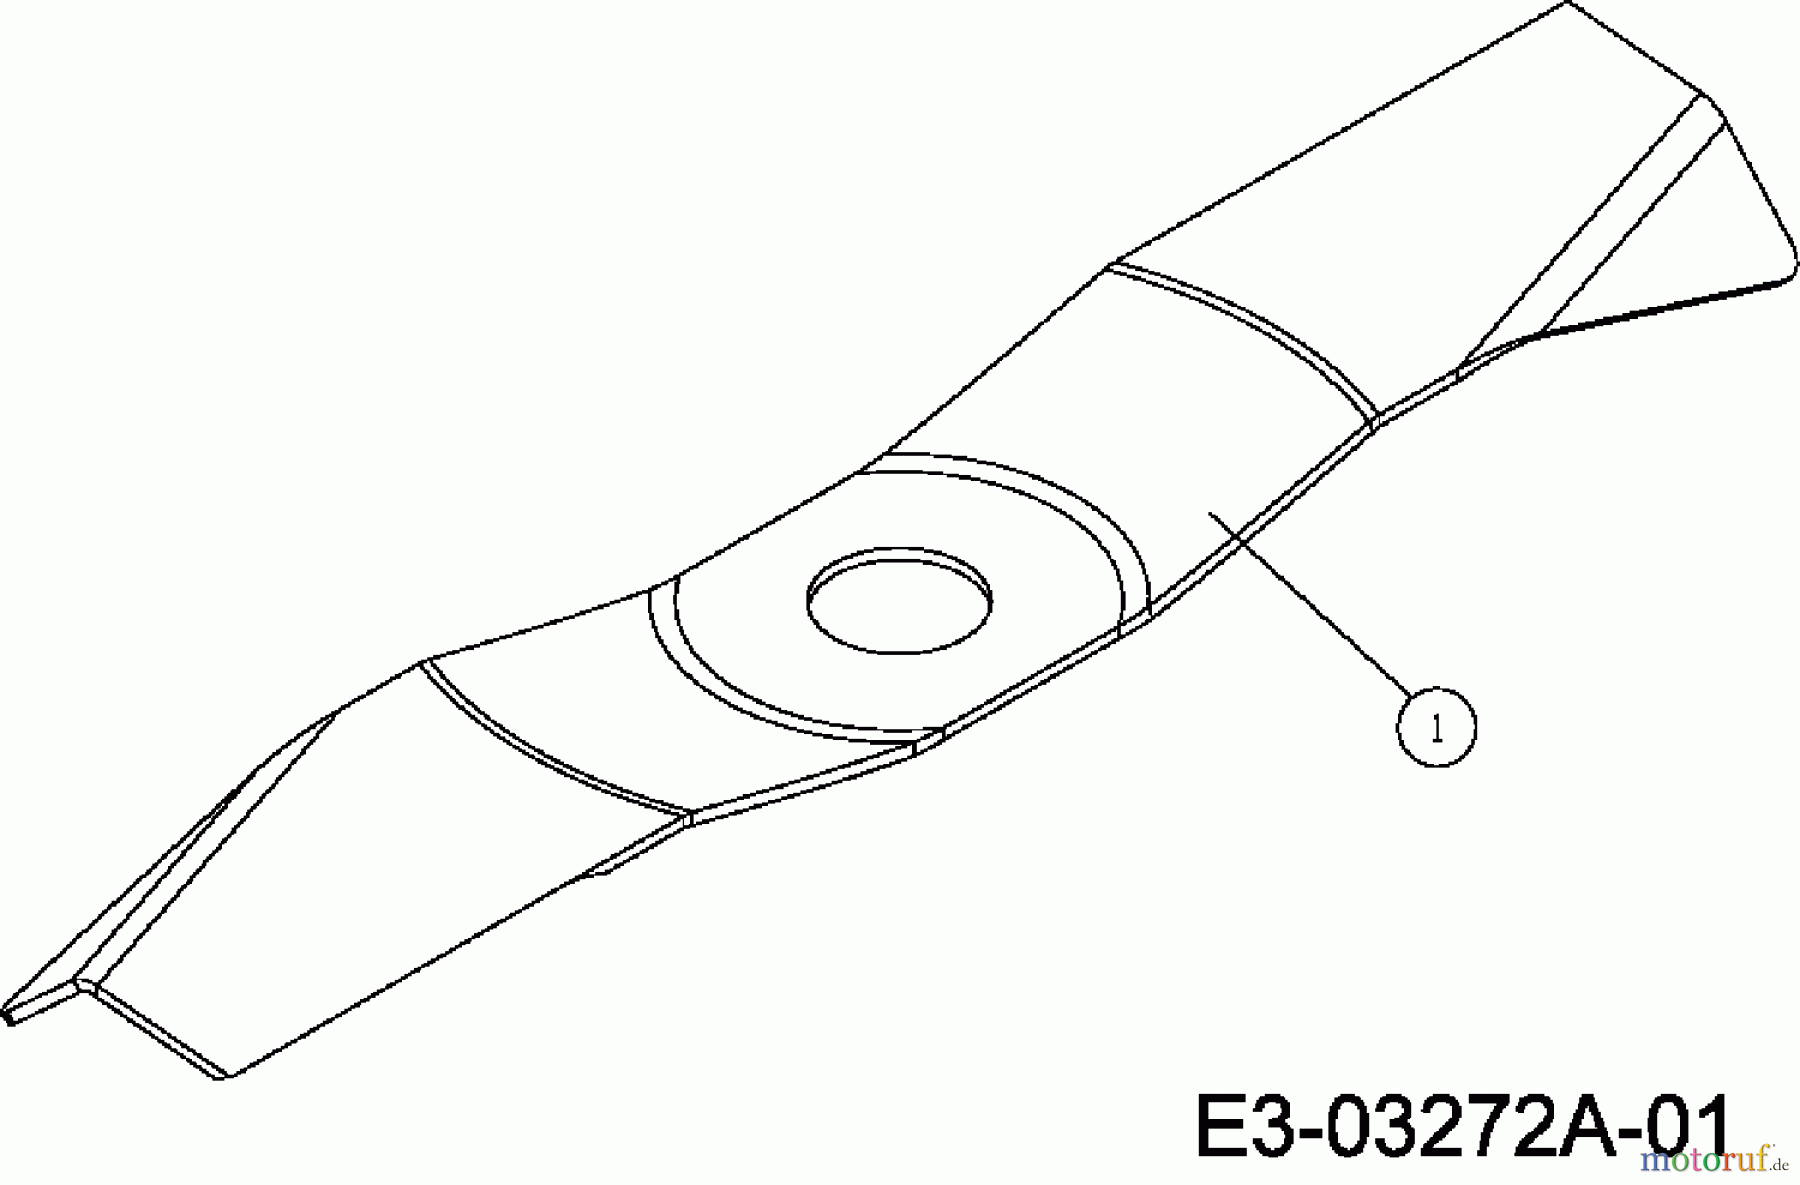  MTD Elektromäher E 40 W 18C-N4S-678  (2007) Messer